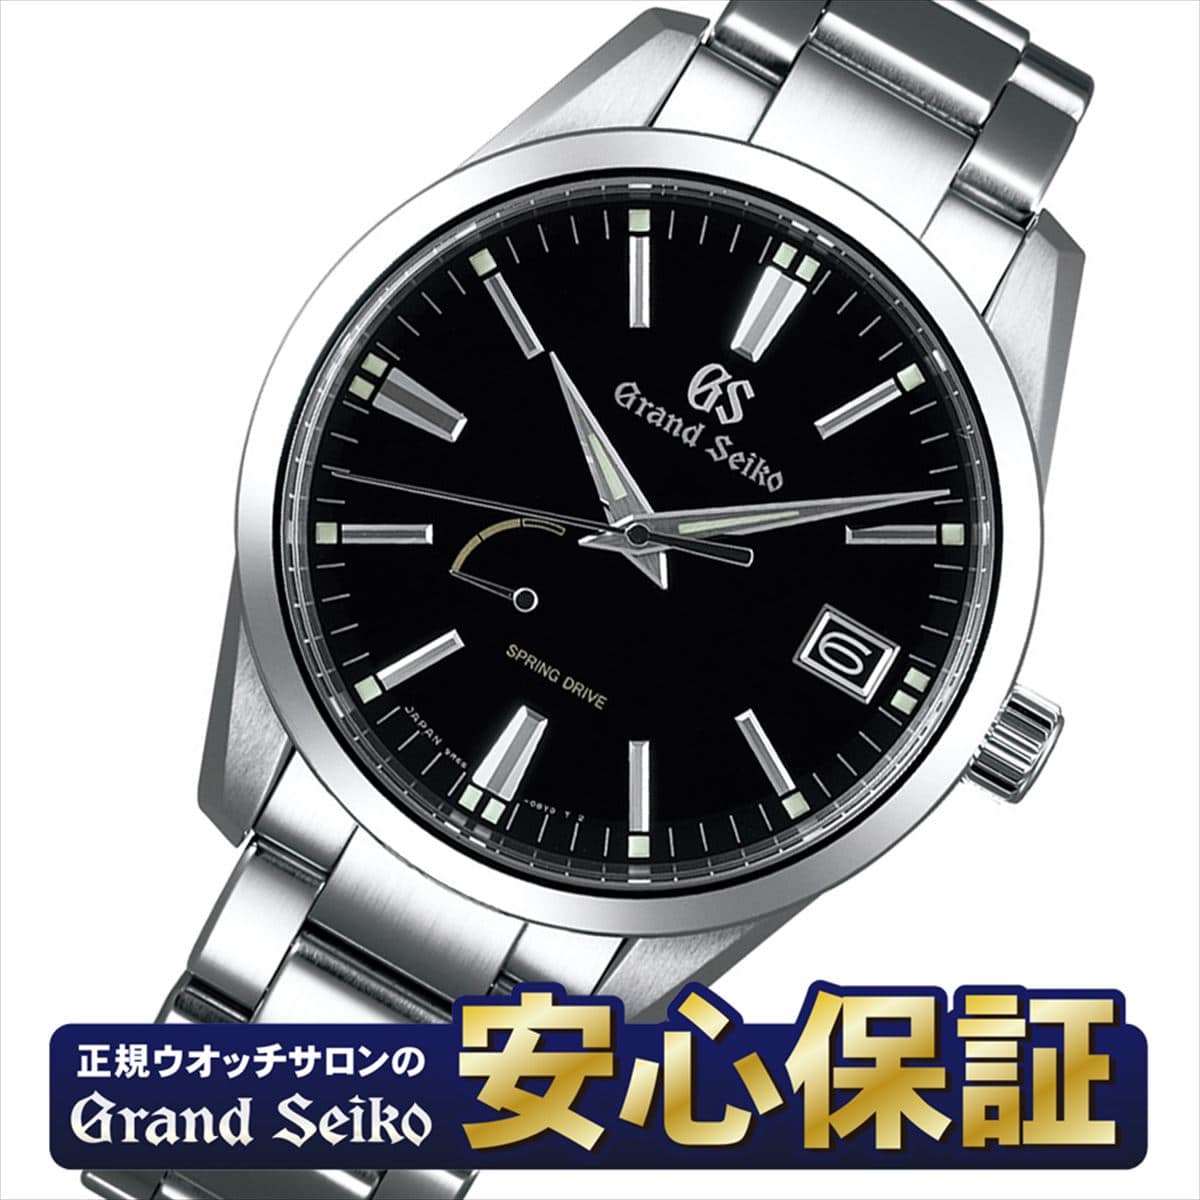 New] Grand SEIKO SBGA301 spring drive 9R65 men watch GRAND SEIKO NLGS_10spl  - BE FORWARD Store